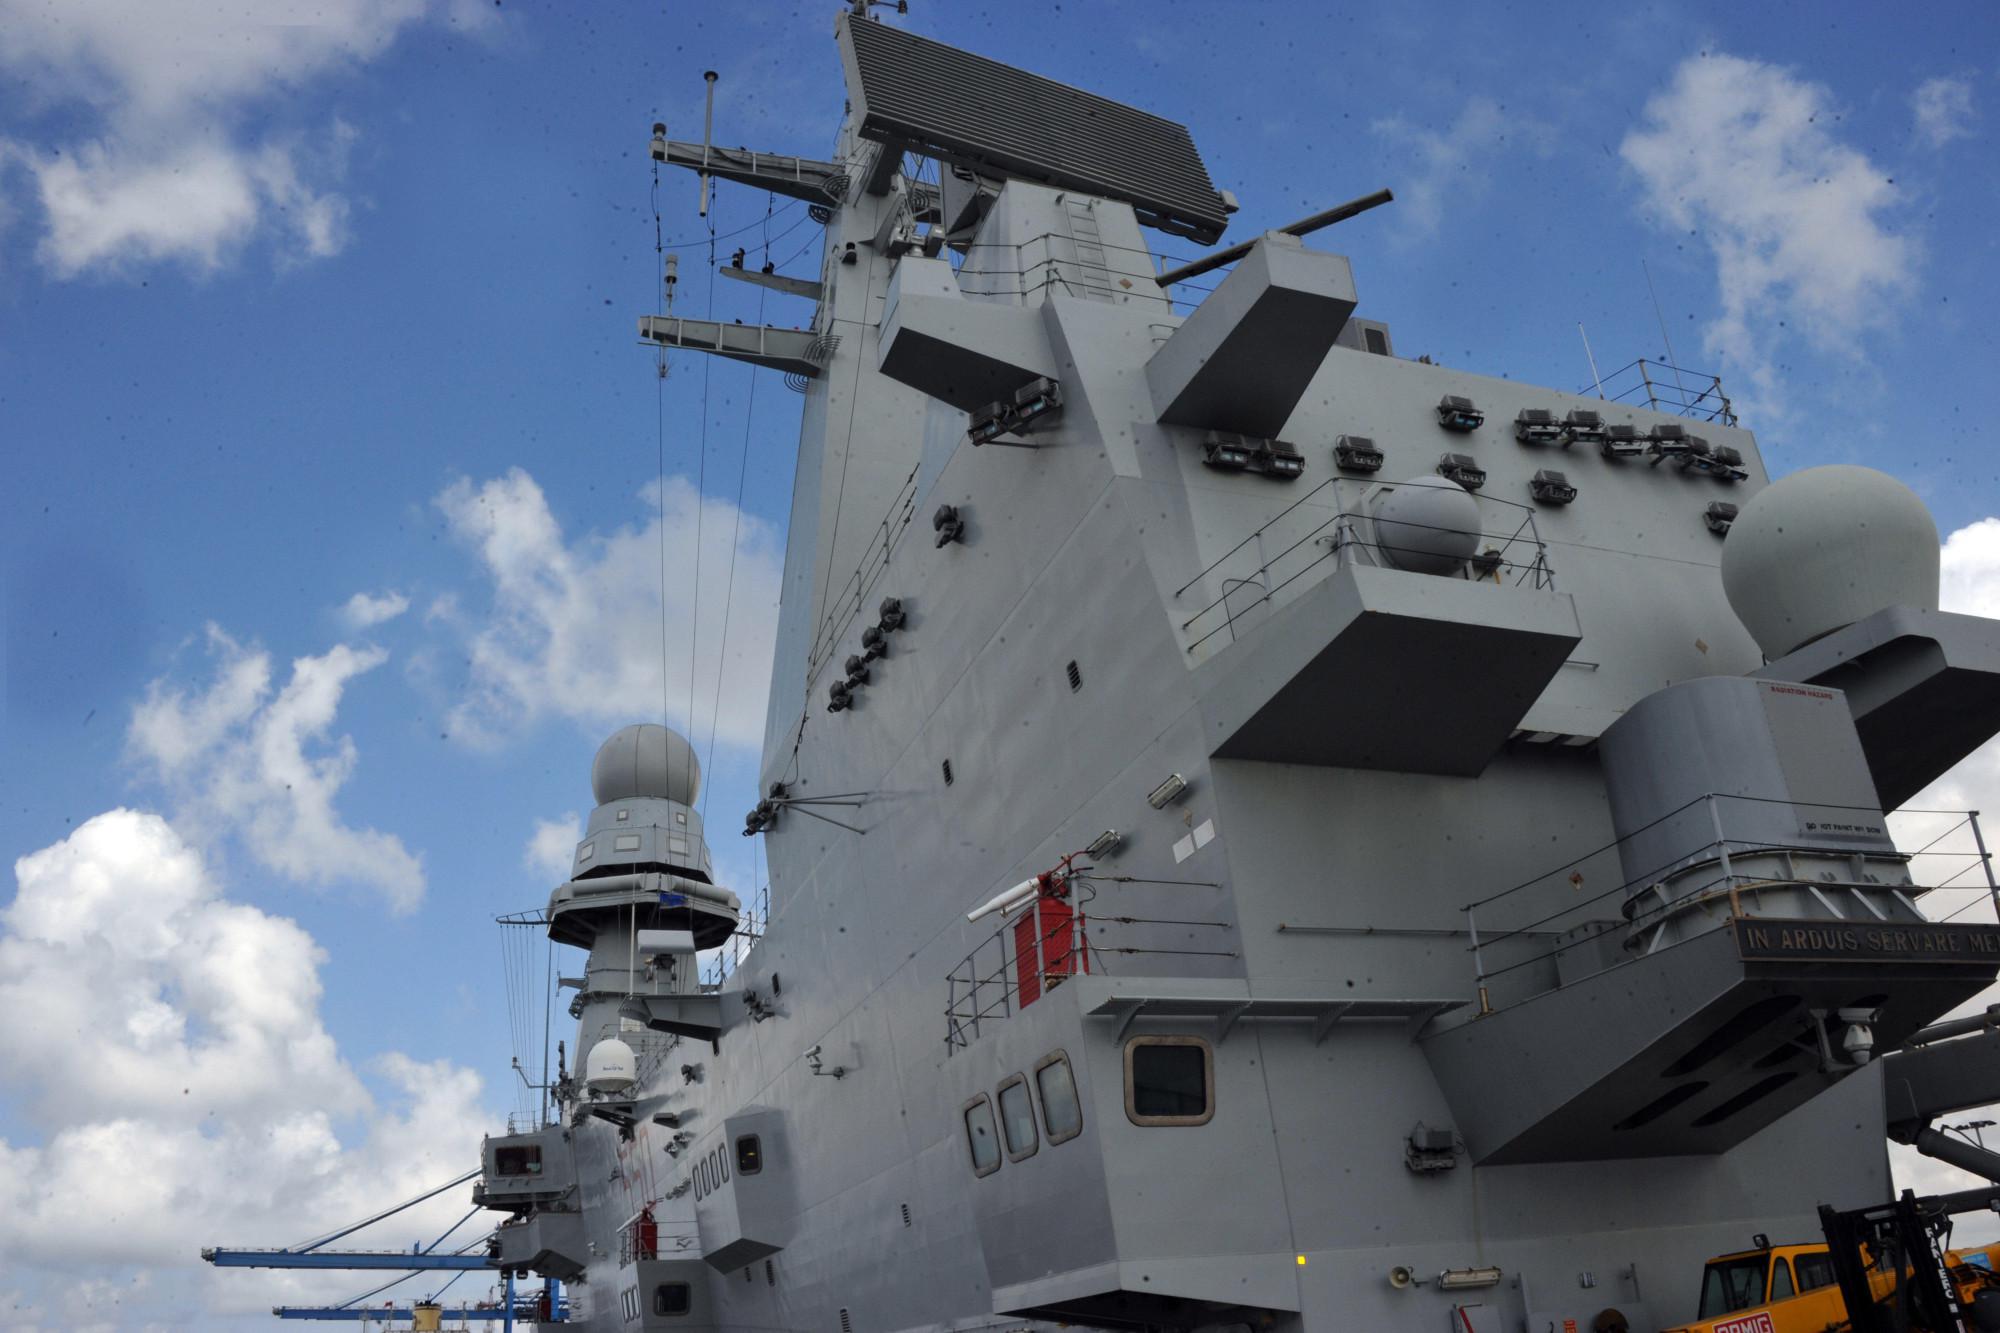 “Marina Militare sorveglia navi russe nel Mediterraneo”